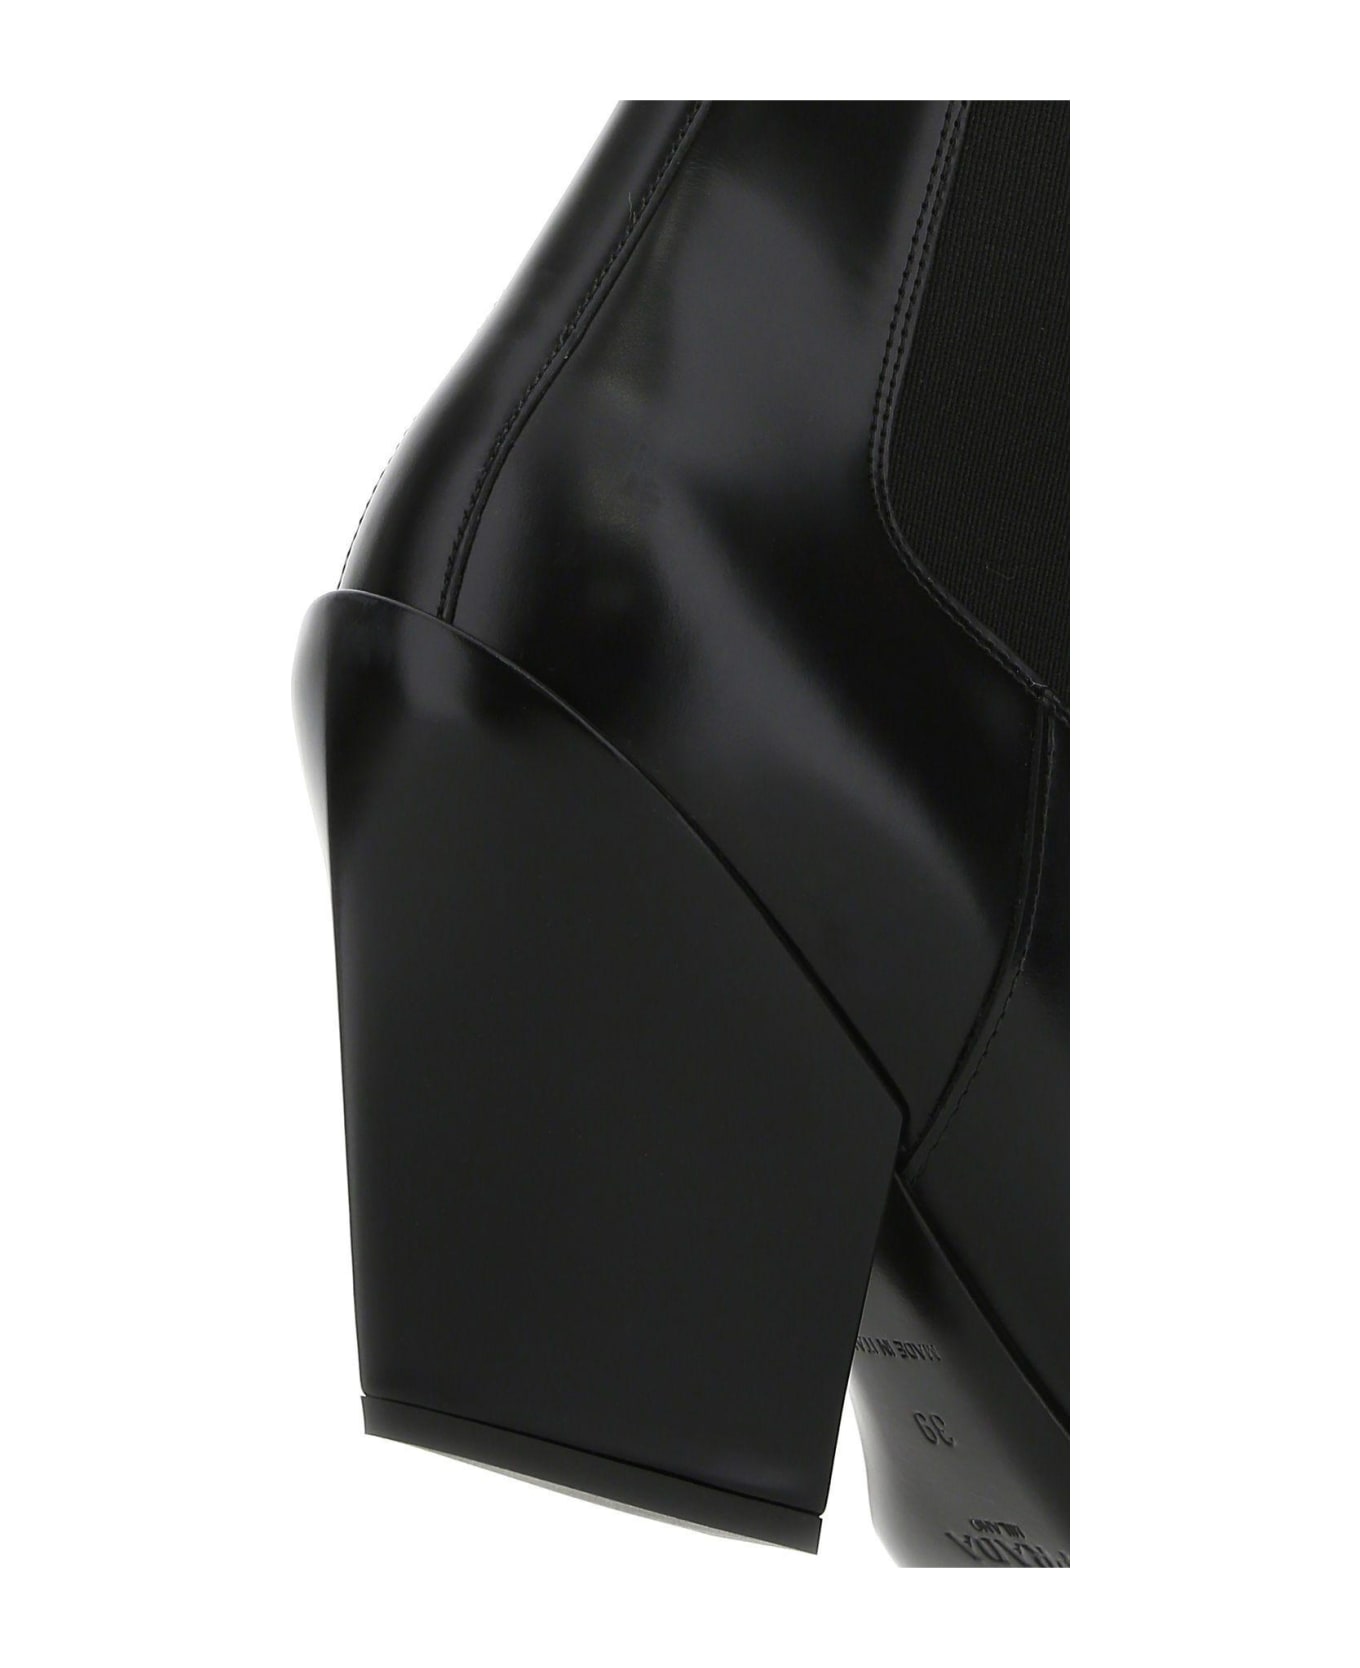 Prada Black Leather Ankle Boots - Nero